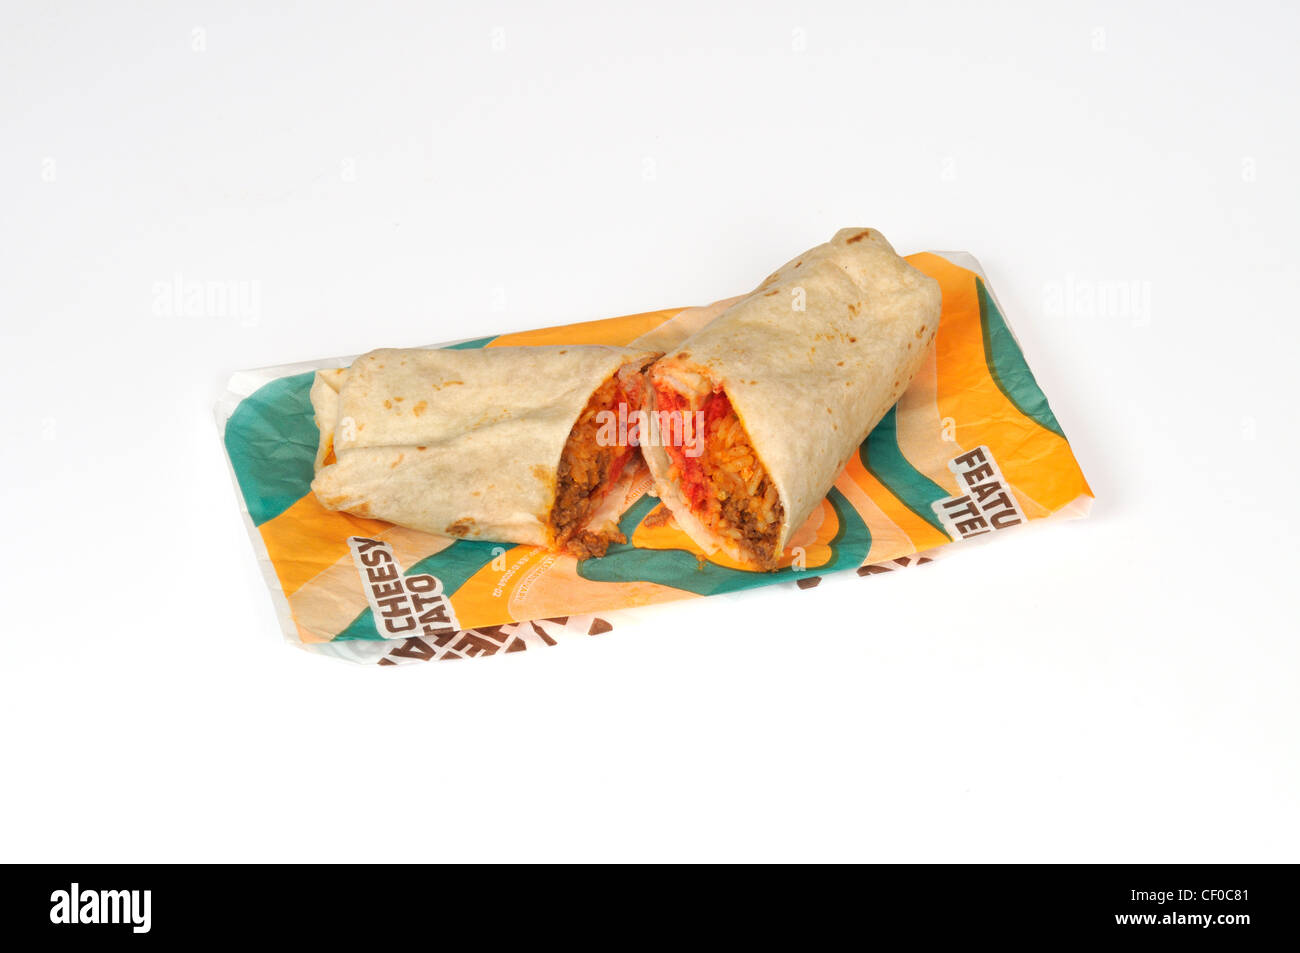 https://c8.alamy.com/comp/CF0C81/taco-bell-burrito-on-paper-wrapper-on-white-background-cutout-usa-CF0C81.jpg